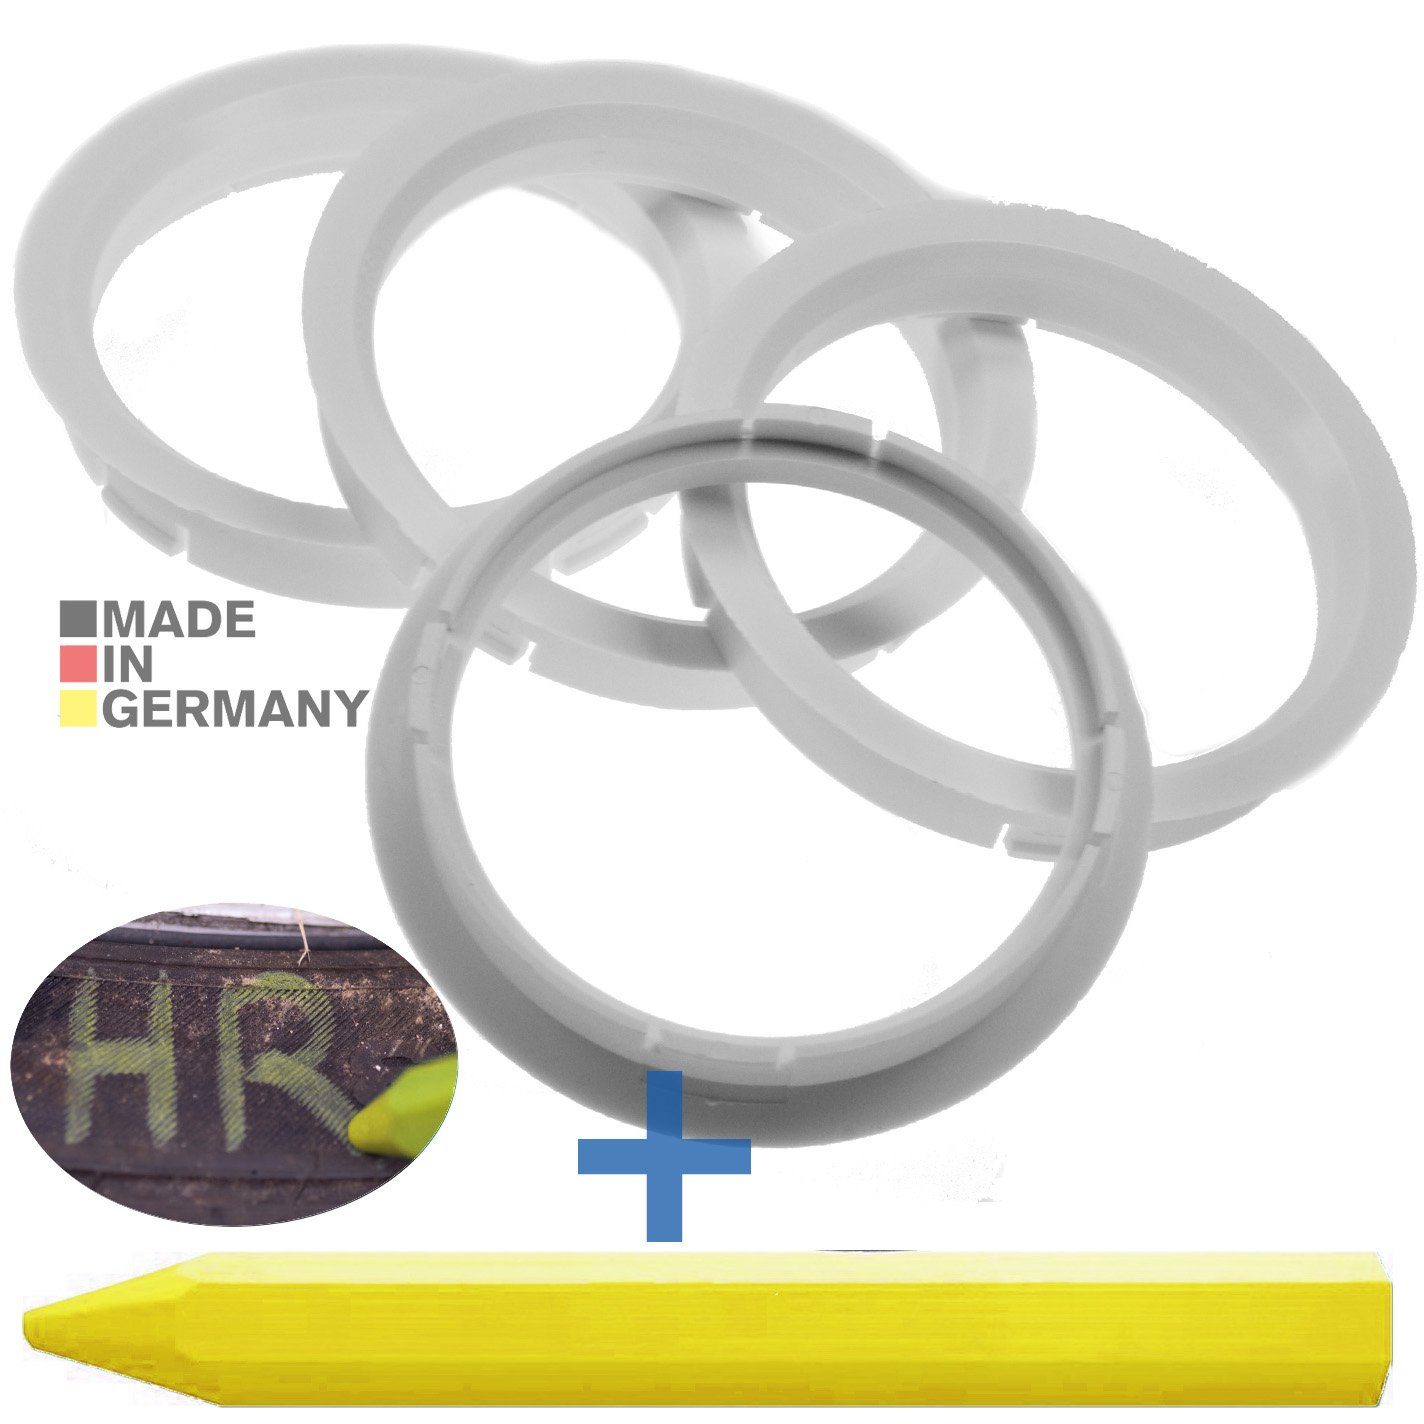 RKC Reifenstift 4X Zentrierringe Weiß Felgen Ringe + 1x Reifen Kreide Fett Stift, Maße: 72,5 x 65,1 mm